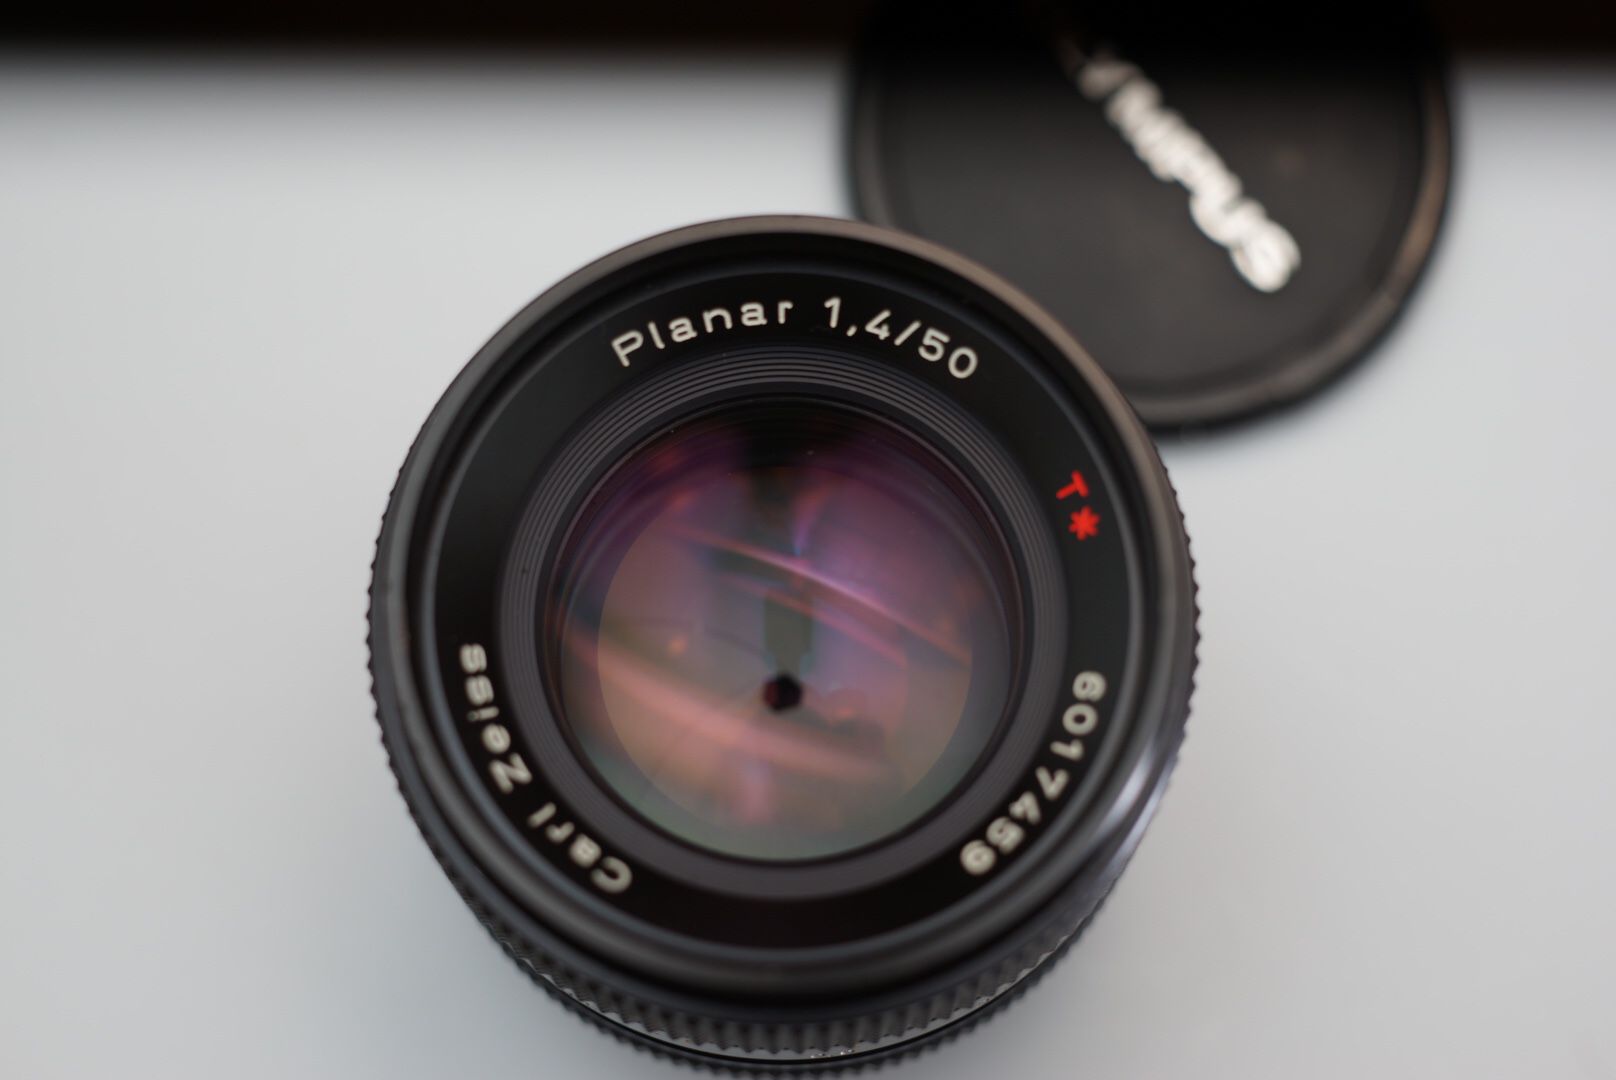 Contax Carl Zeiss Planar 50mm 1.4 AEJ Lens.